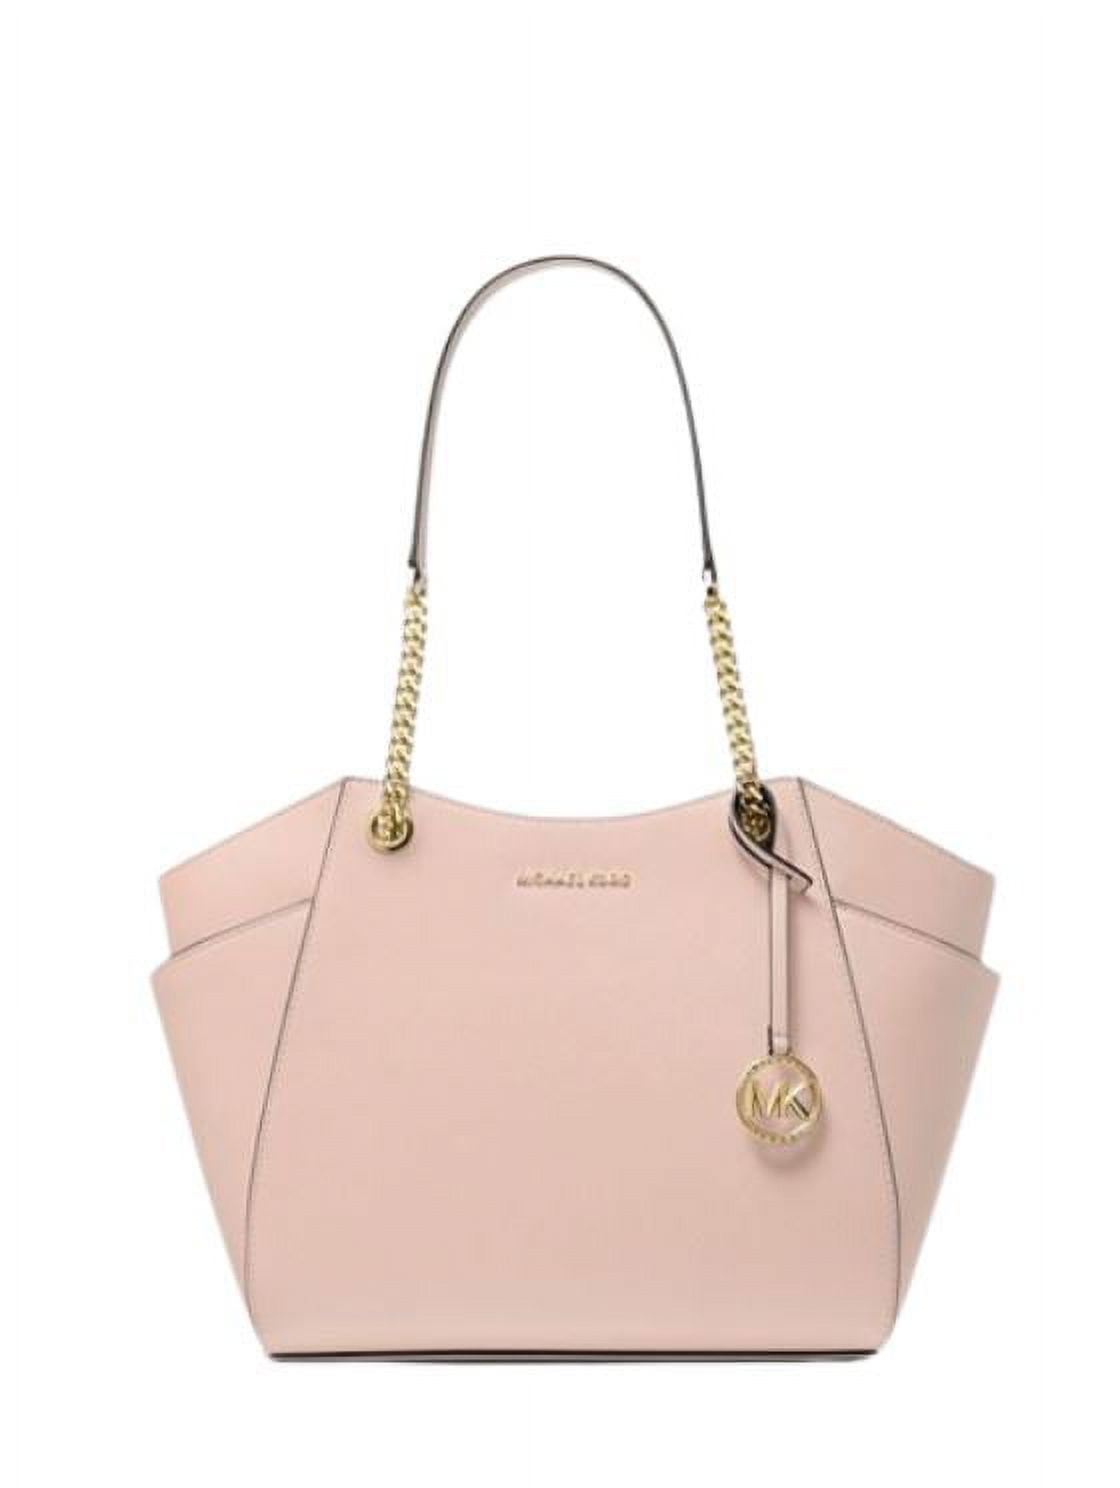 Michael Kors Aria Large Pebbled Soft Pink Leather Tote Handbag Purse New |  eBay